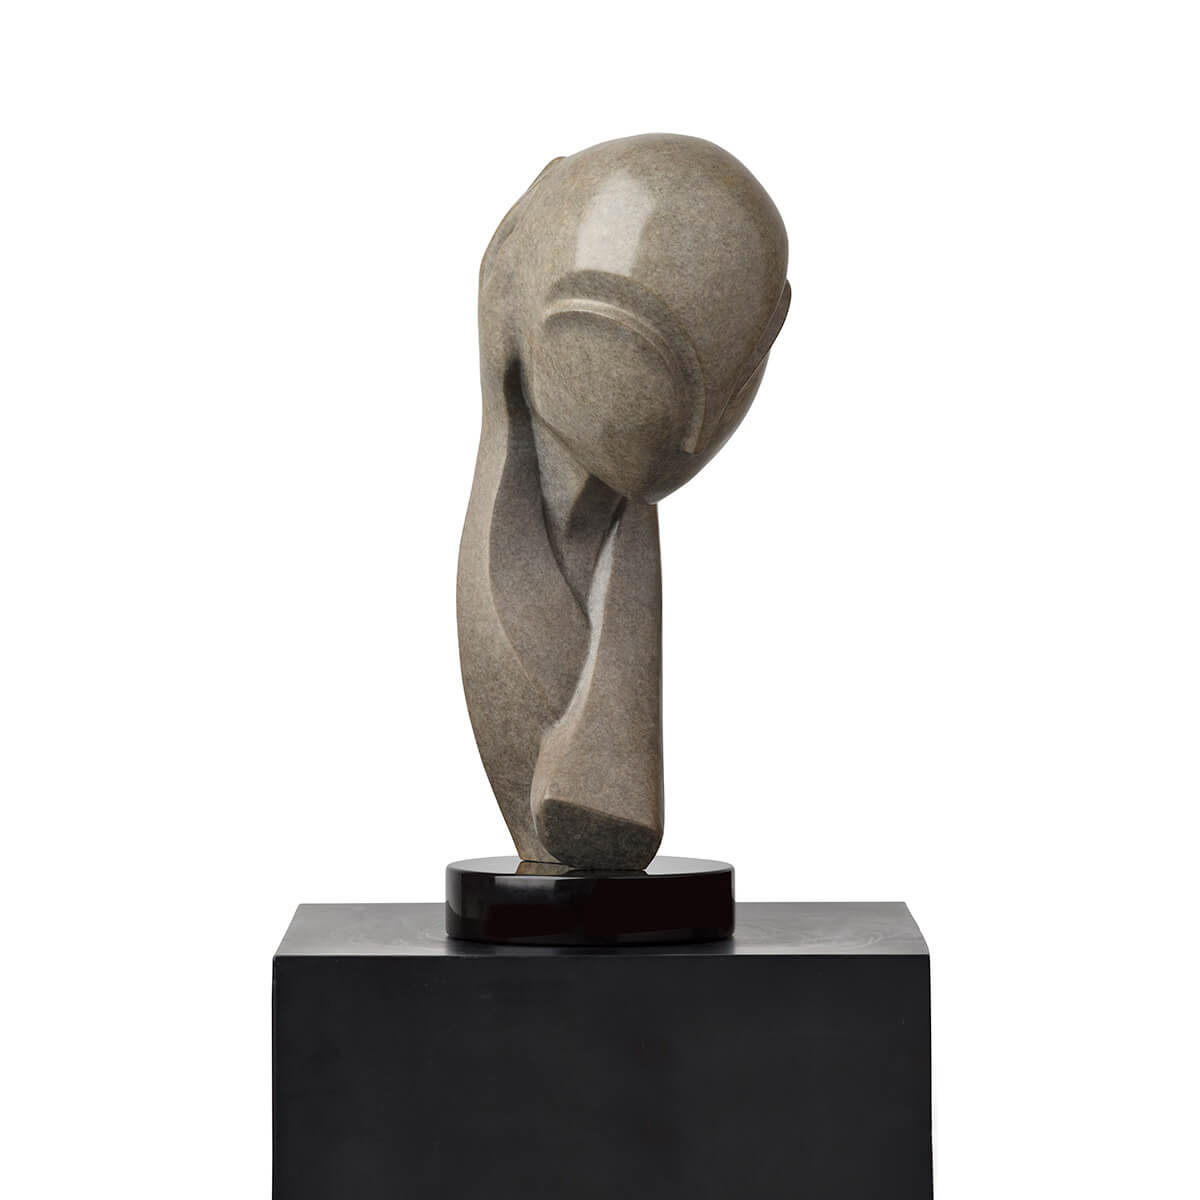 Robert-Helle-Sculpture-Gallery-Knowing-3-1200x1200